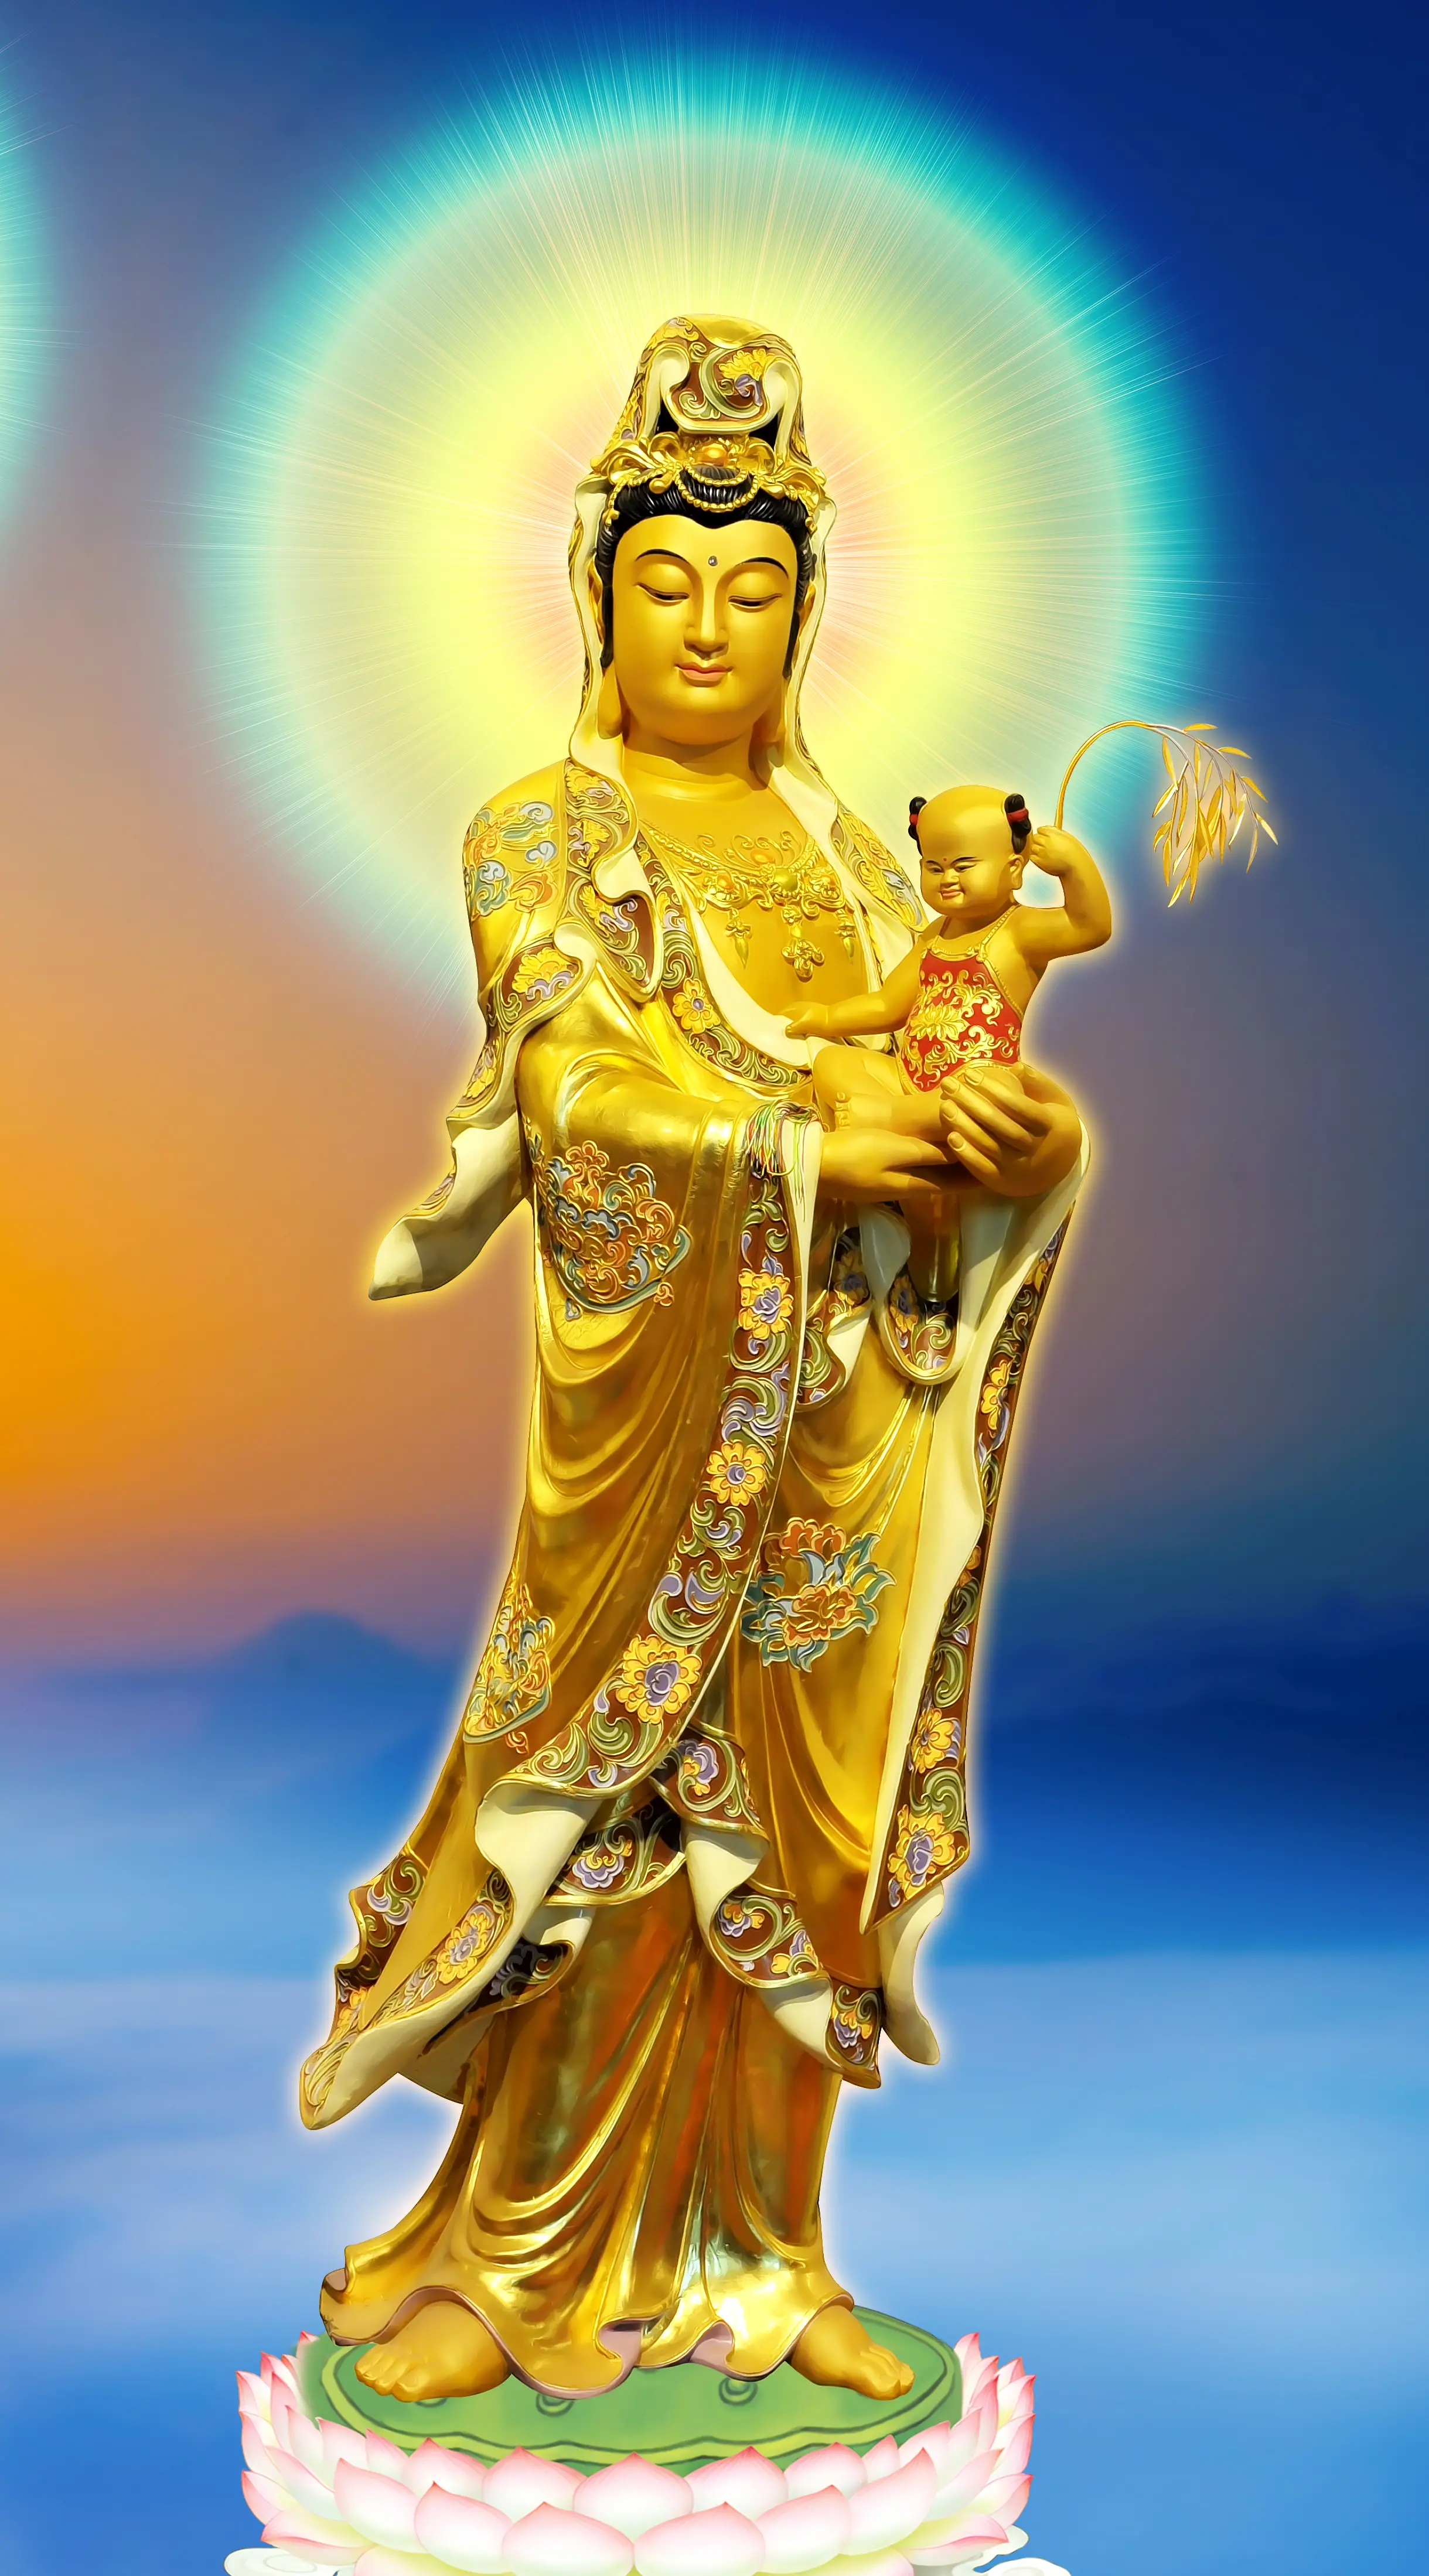 Wallpaper Buddha untuk ponsel | Buddhisme Vietnam